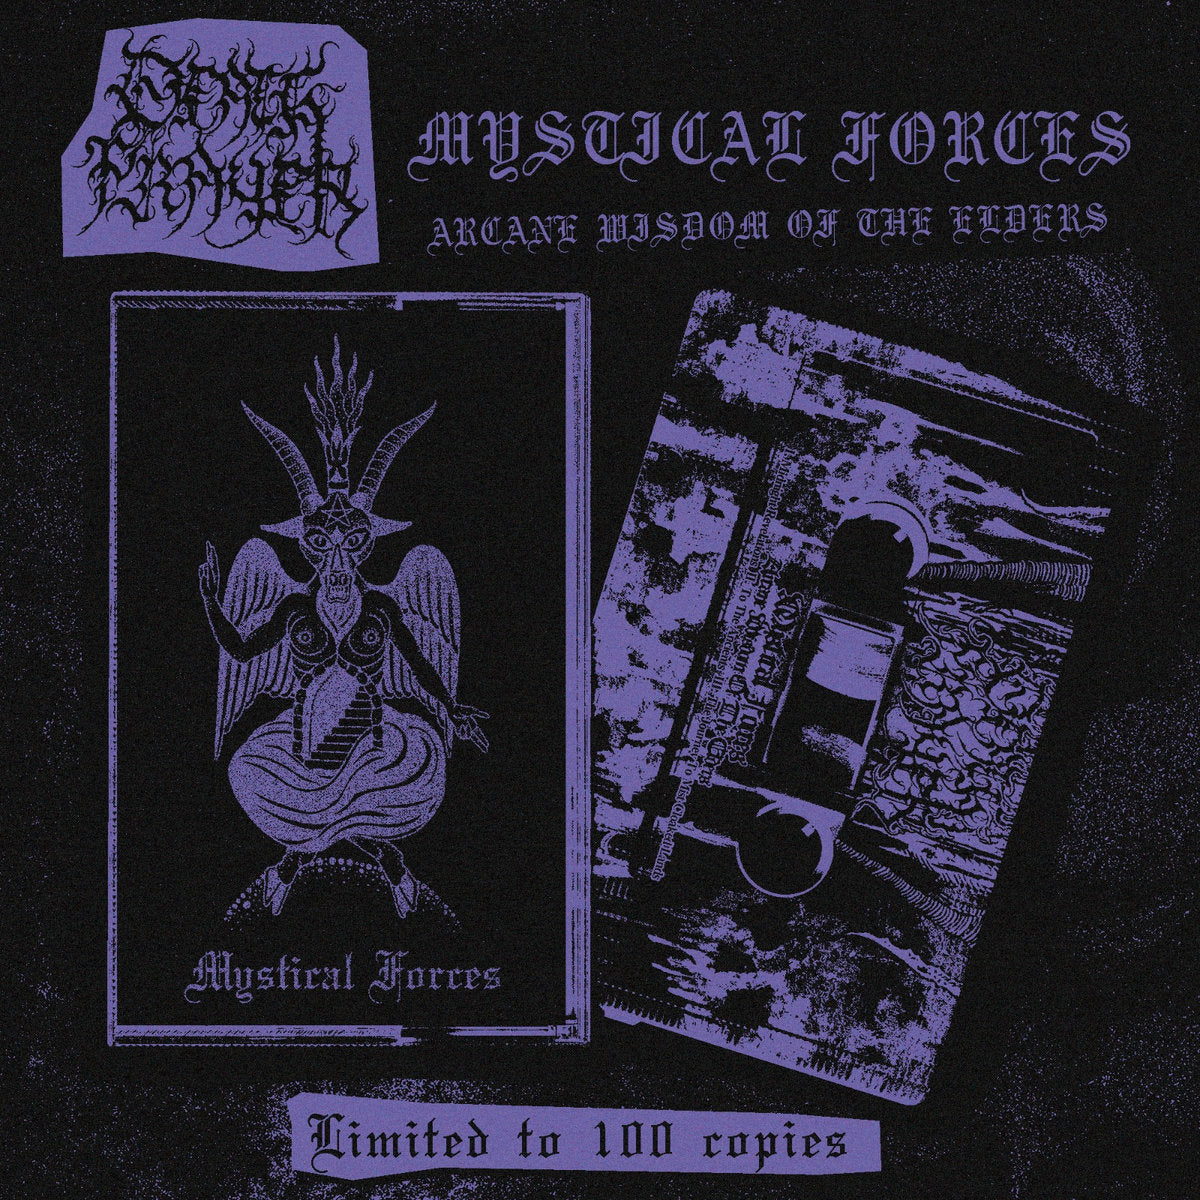 [SOLD OUT] MYSTICAL FORCES "Arcane Wisdom of the Elders" cassette tape (lim.100) [Gate Master / Count Vornok]